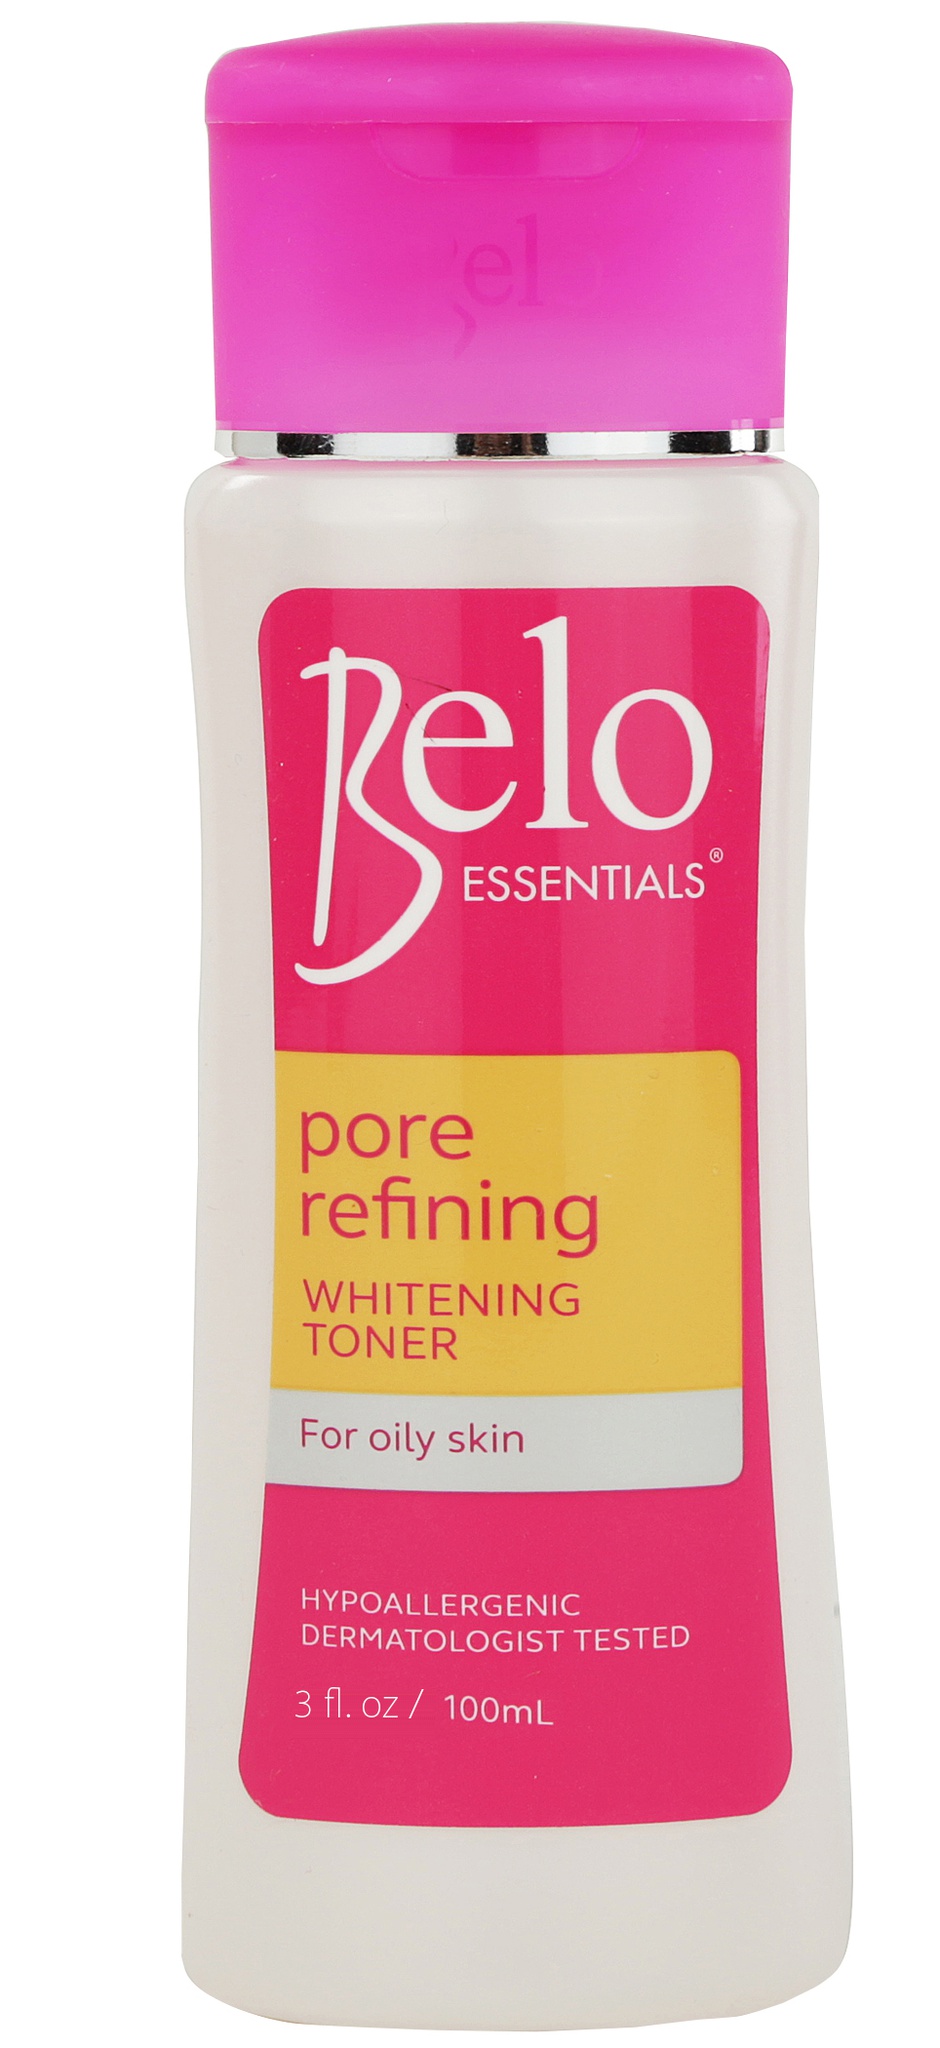 Belo Essentials Pore Refining Whitening Toner For Oily Skin